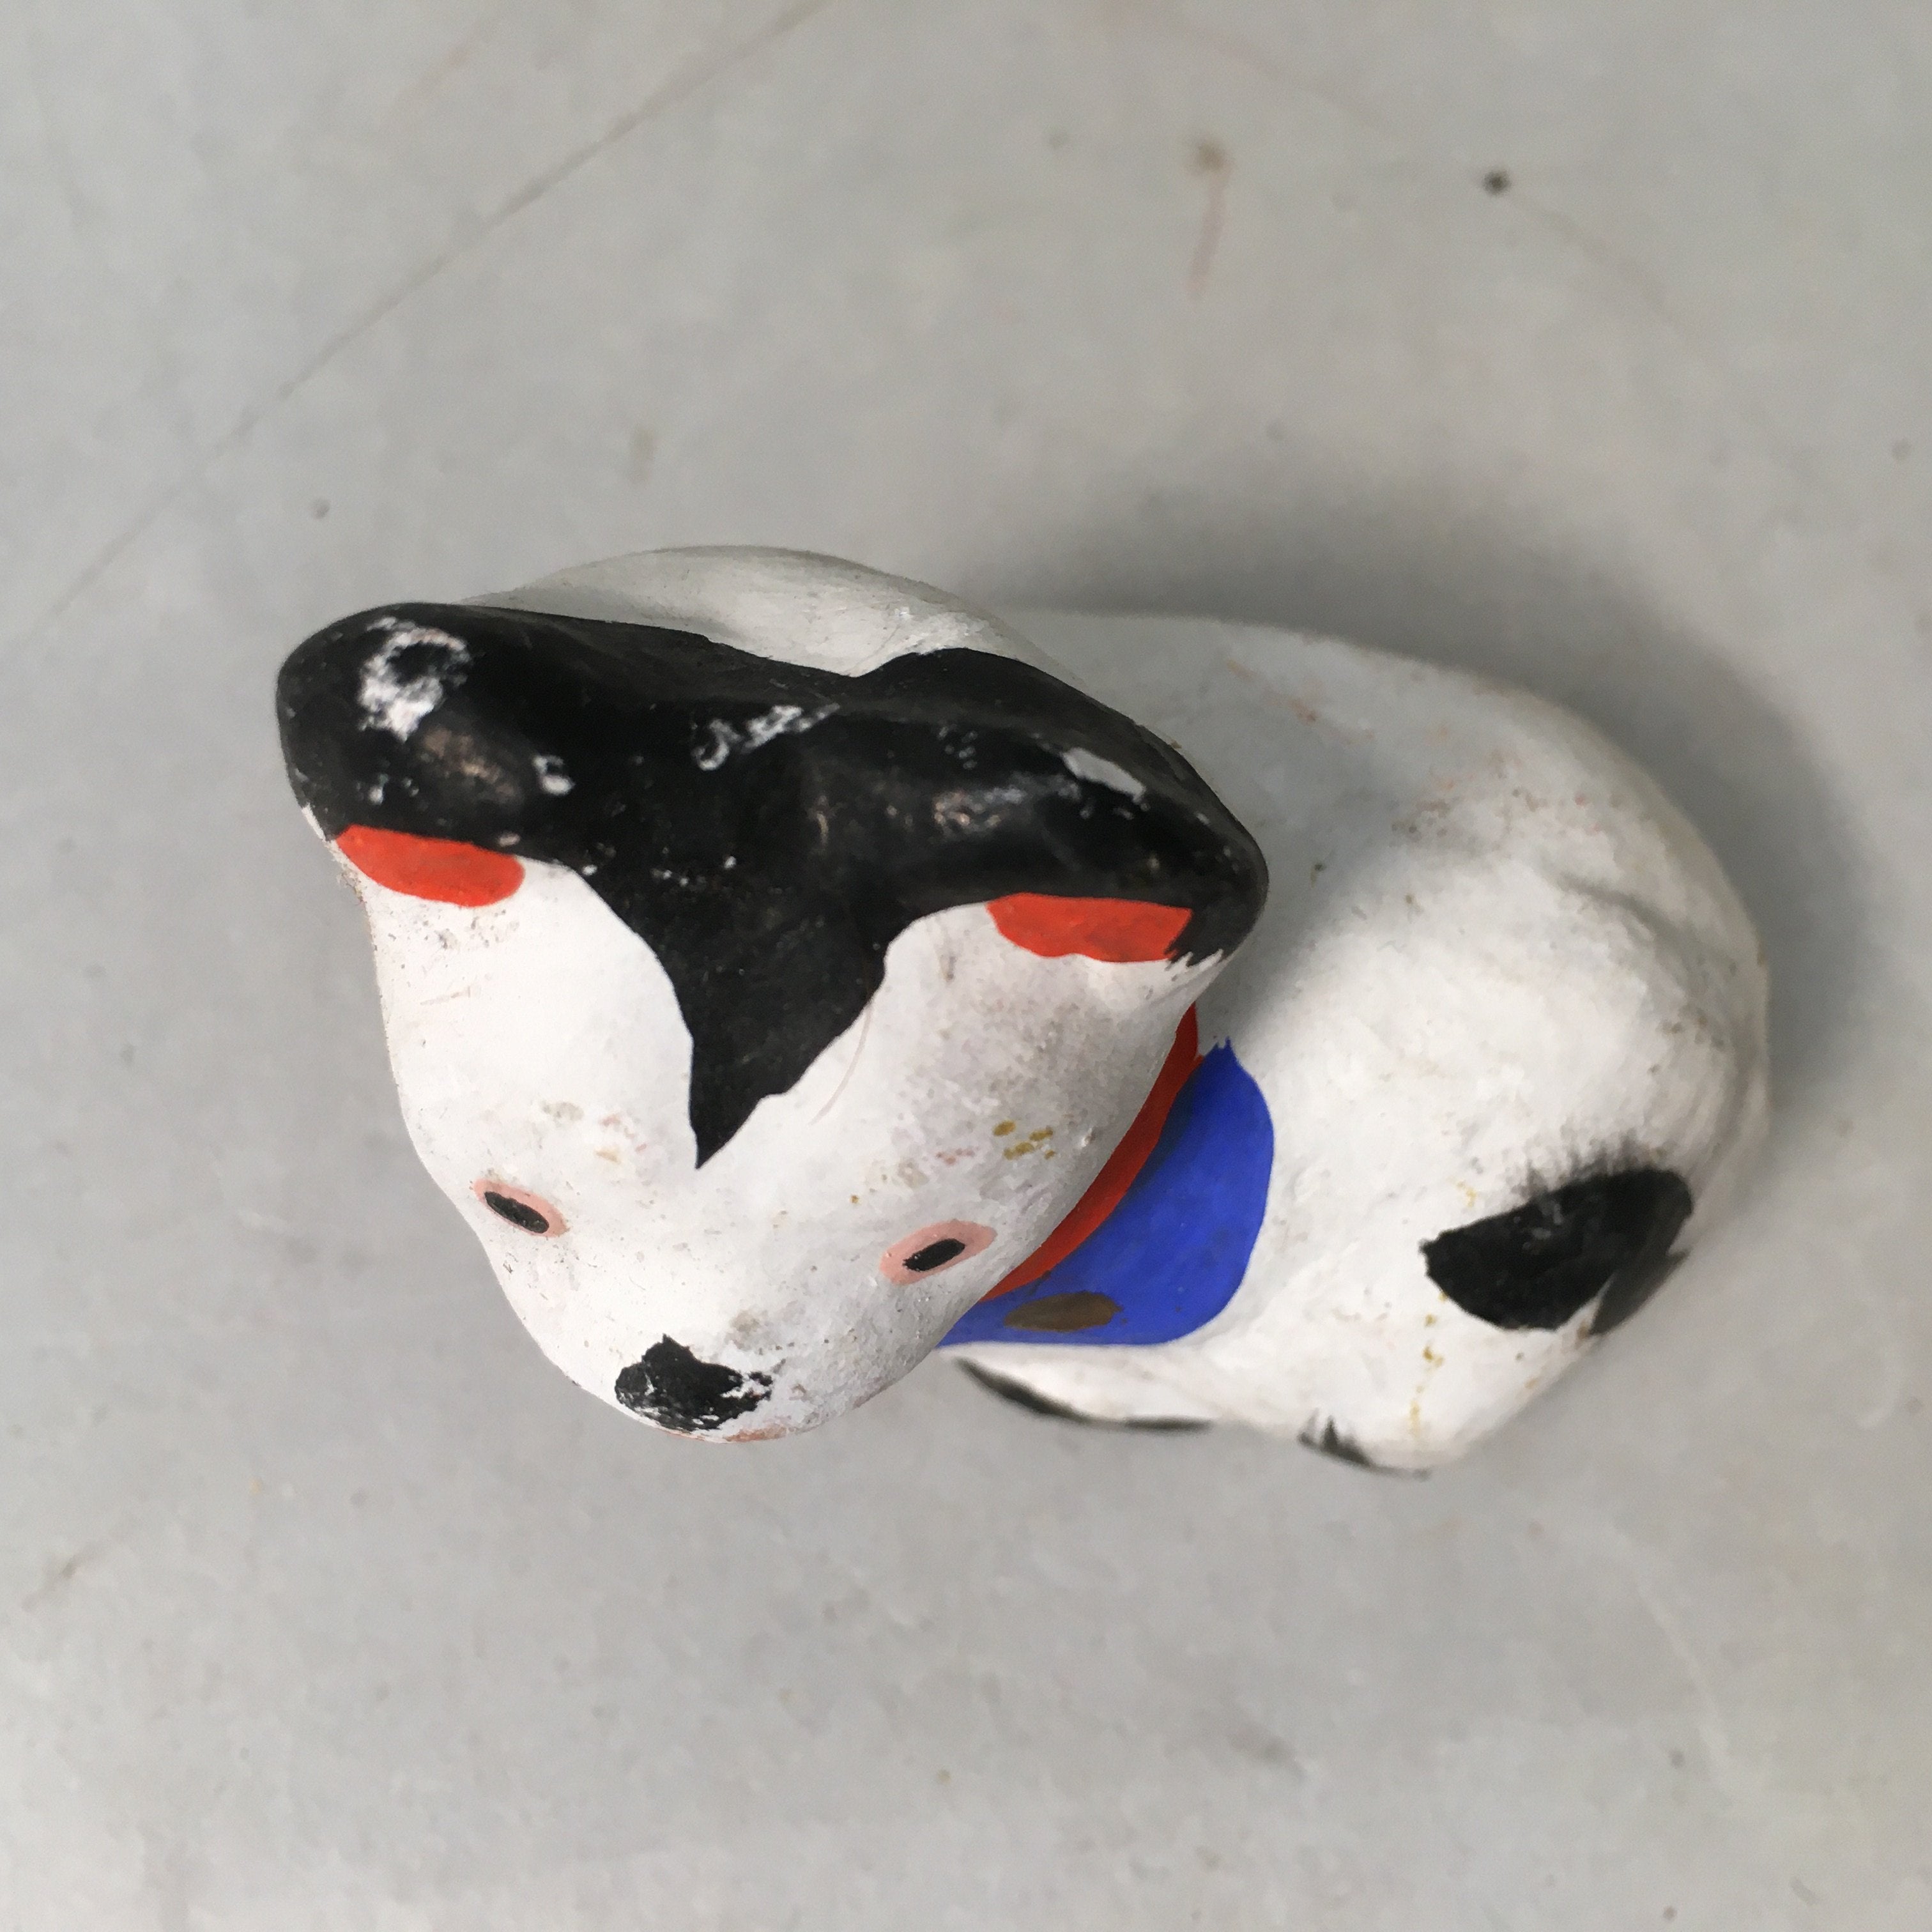 Japanese Kokeshi Doll Vtg Ceramic Figurine White Dog Otogiinu Inuhariko KF422